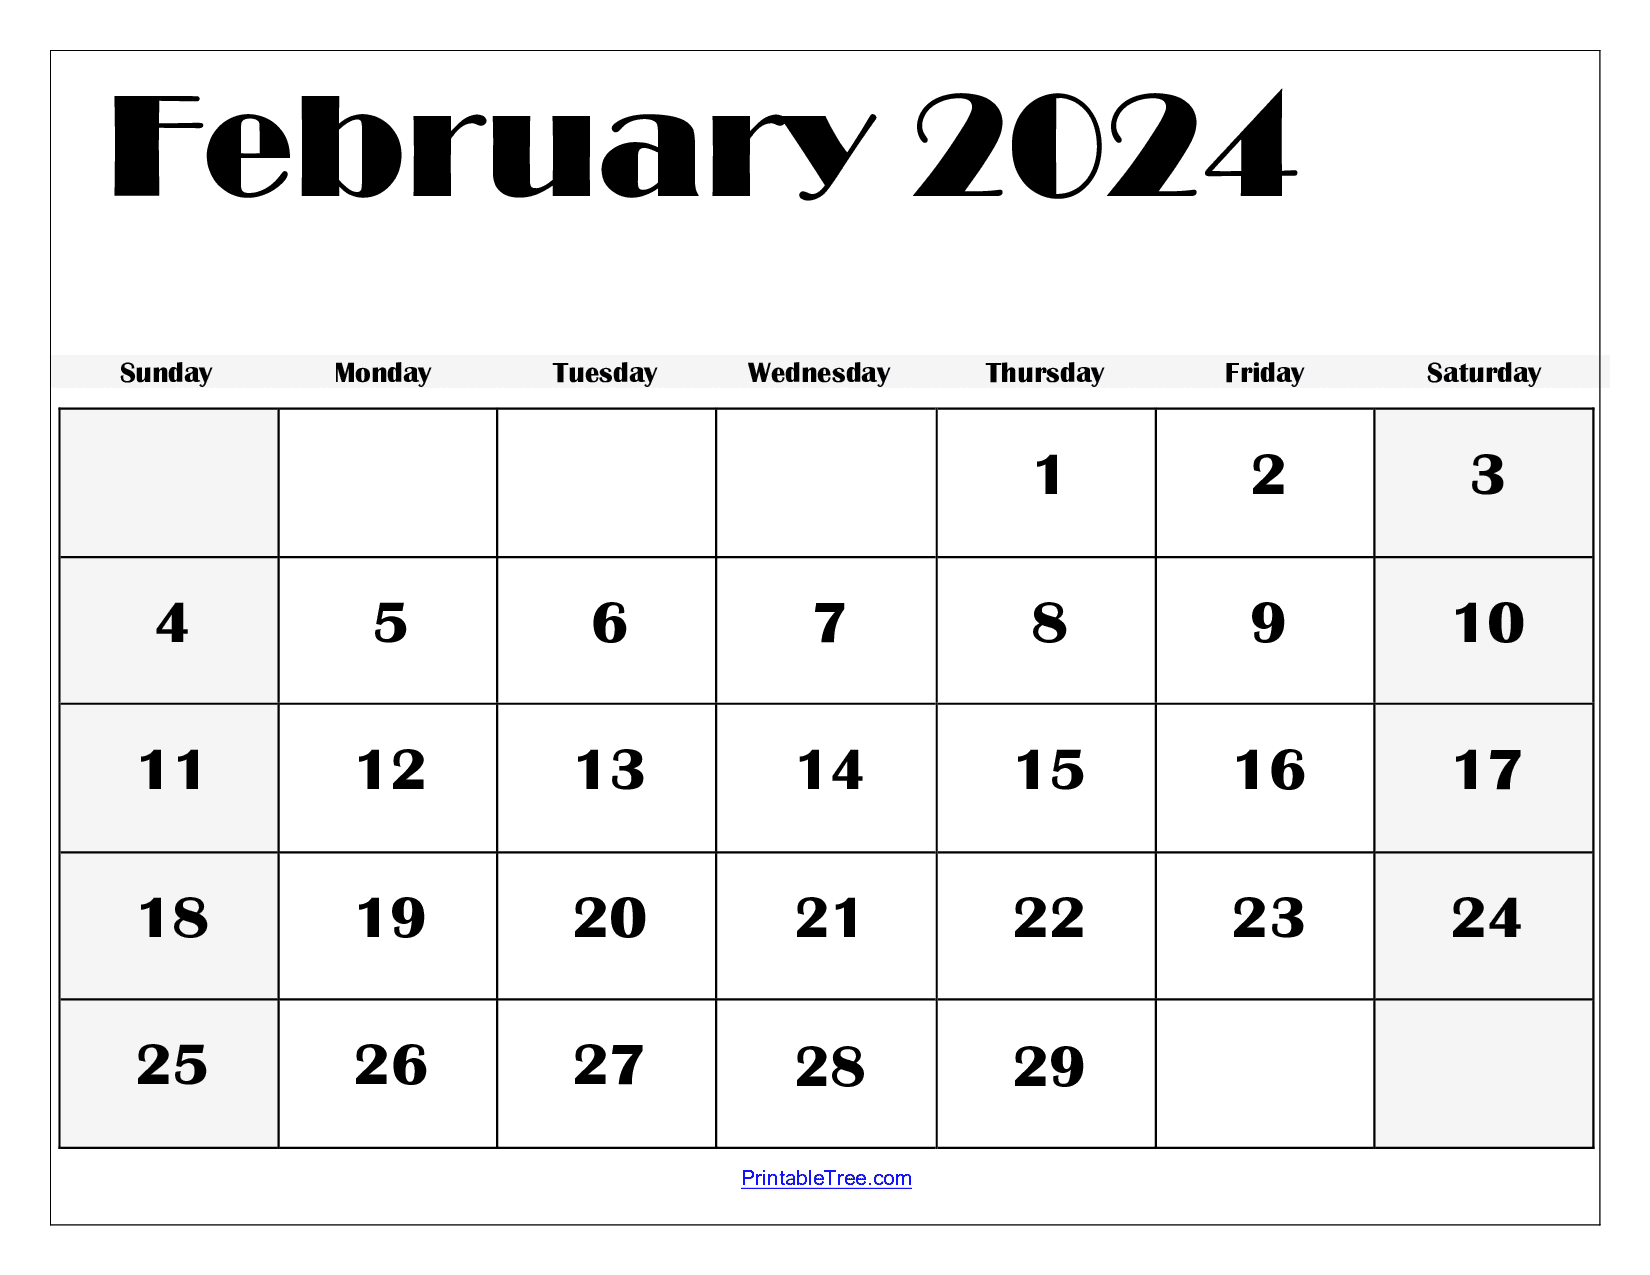 February 2024 Calendar Printable Pdf Template With Holidays for Feb 2024 Printable Calendar Free